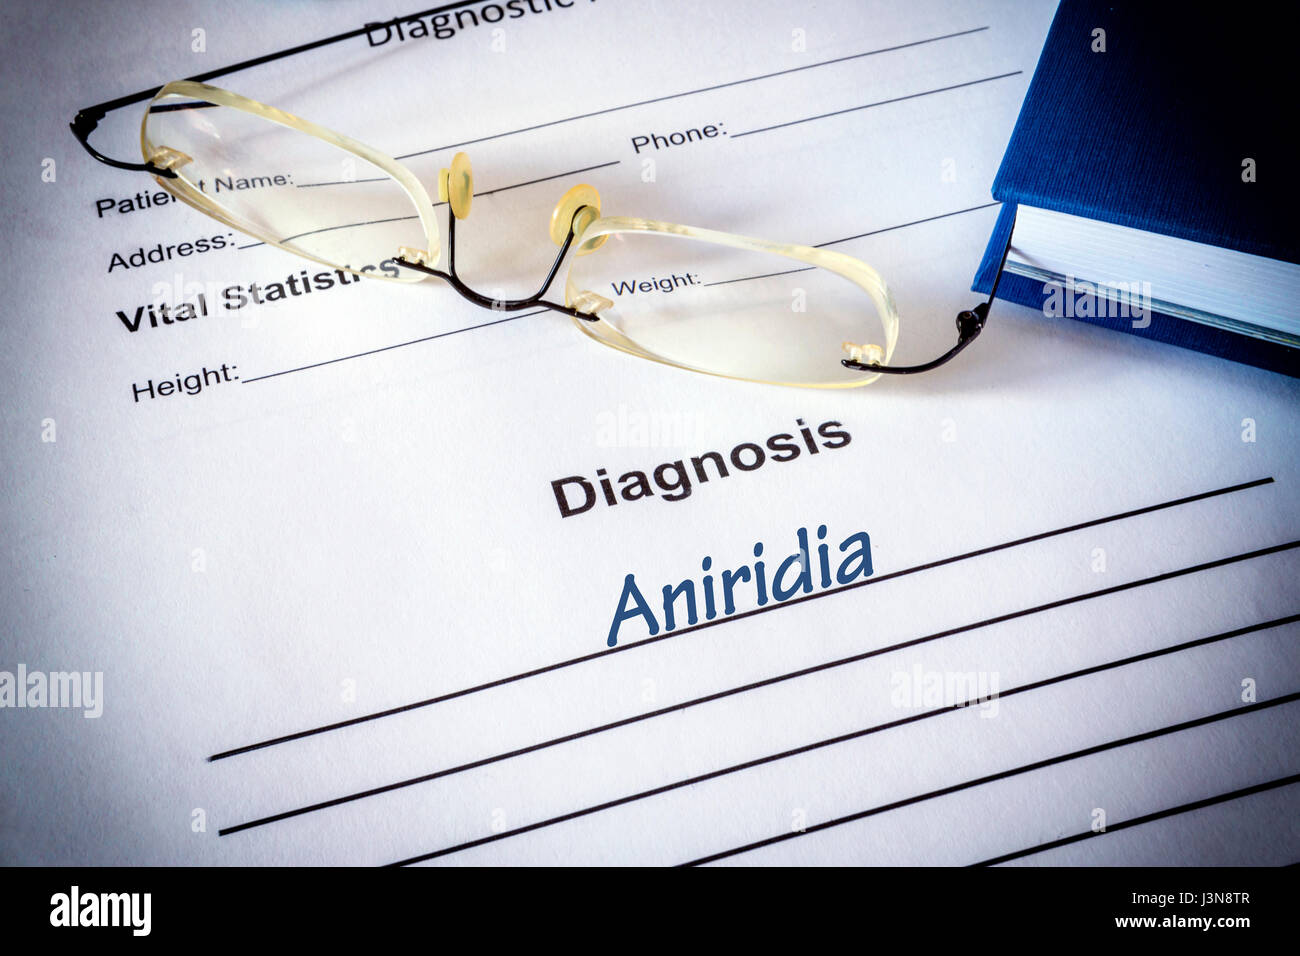 Lista de diagnóstico con aniridia. Concepto de trastorno ocular. Foto de stock